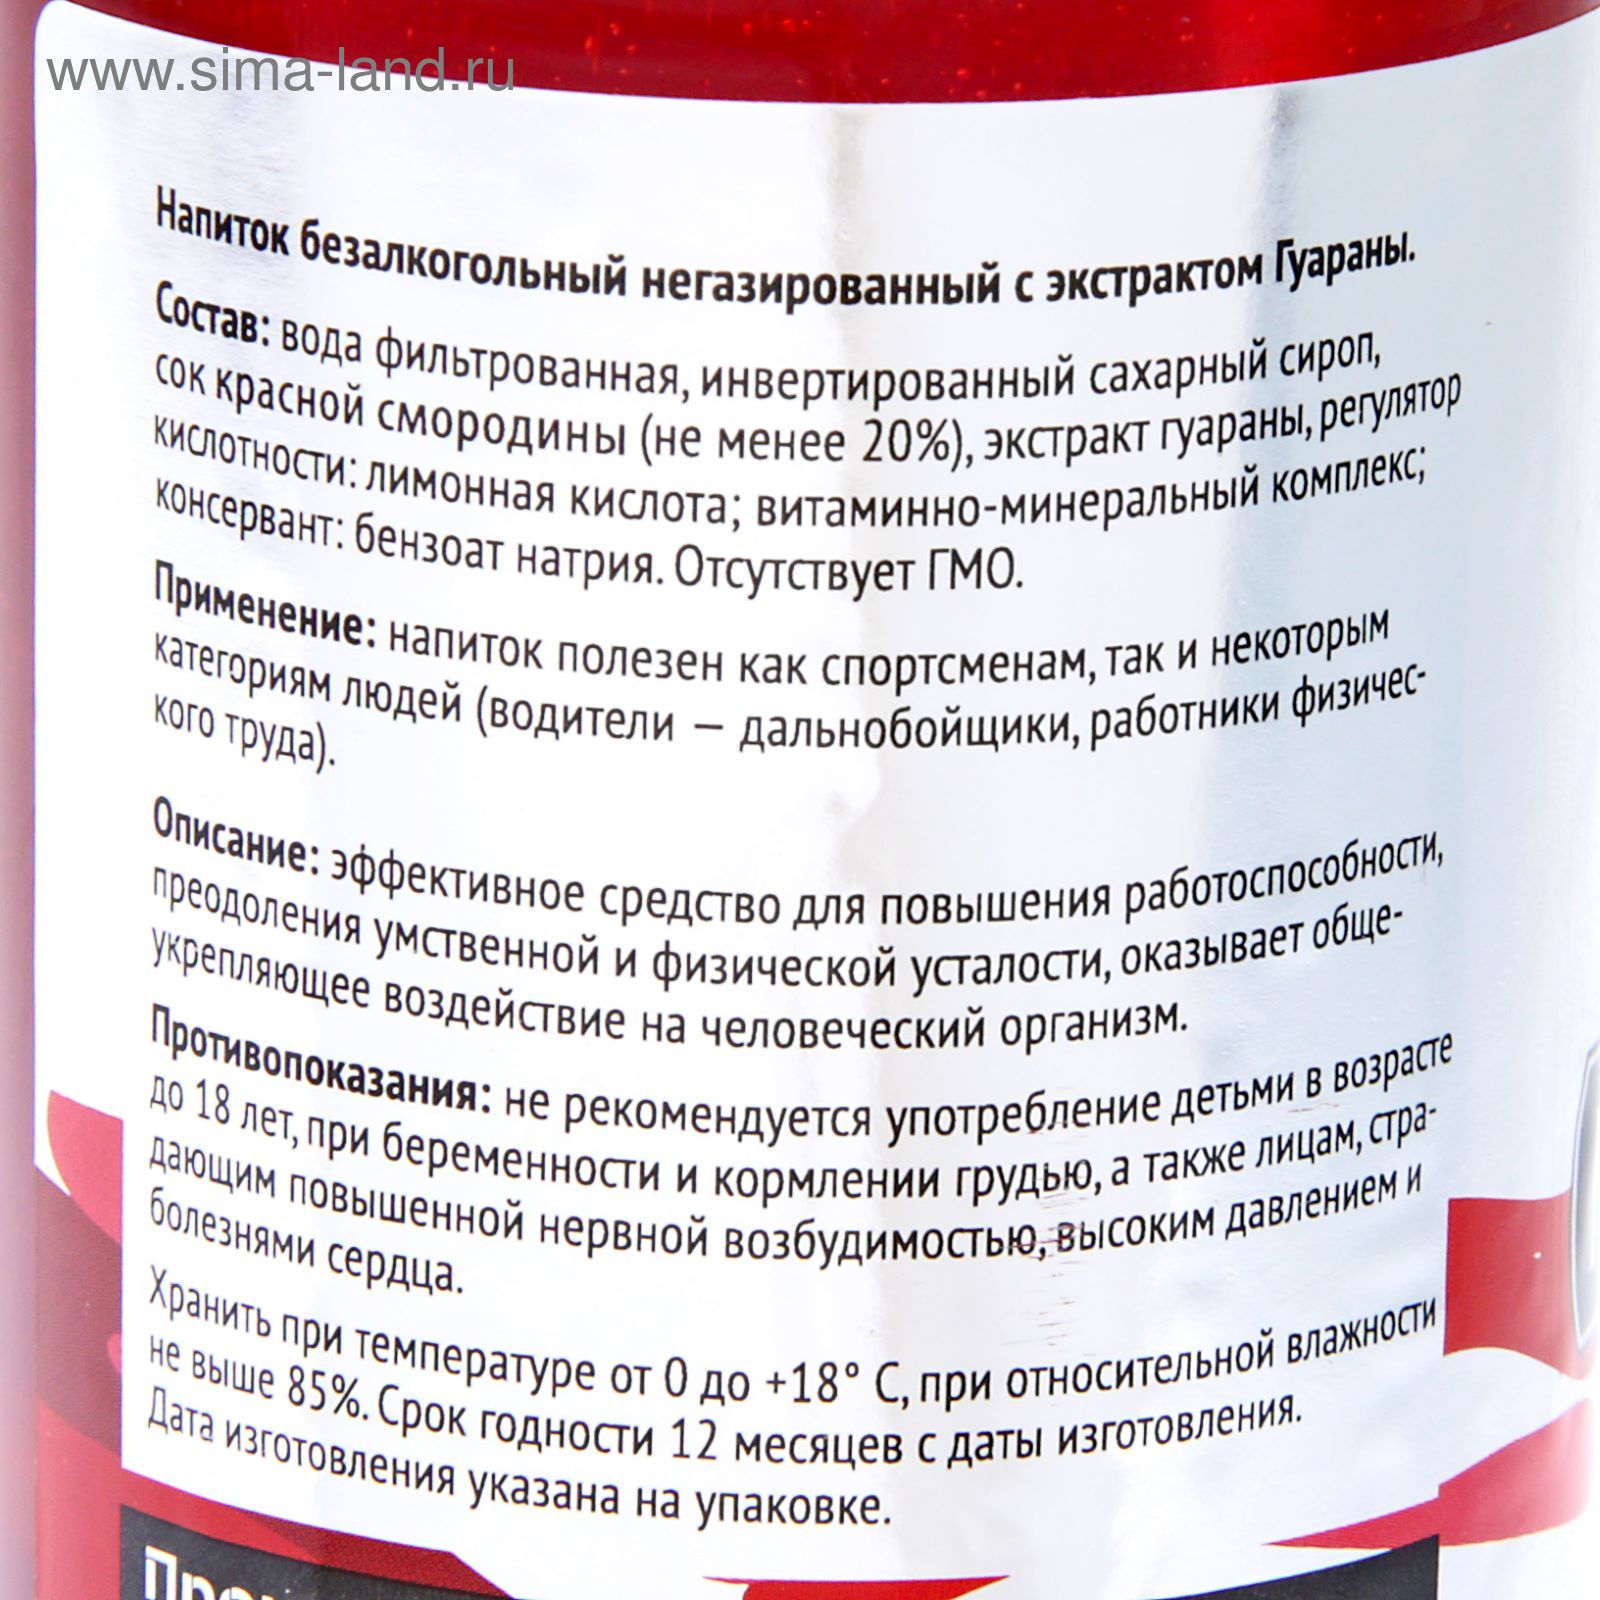 Напиток SportLine Red Energy 2000mg 500ml (Красная смородина)